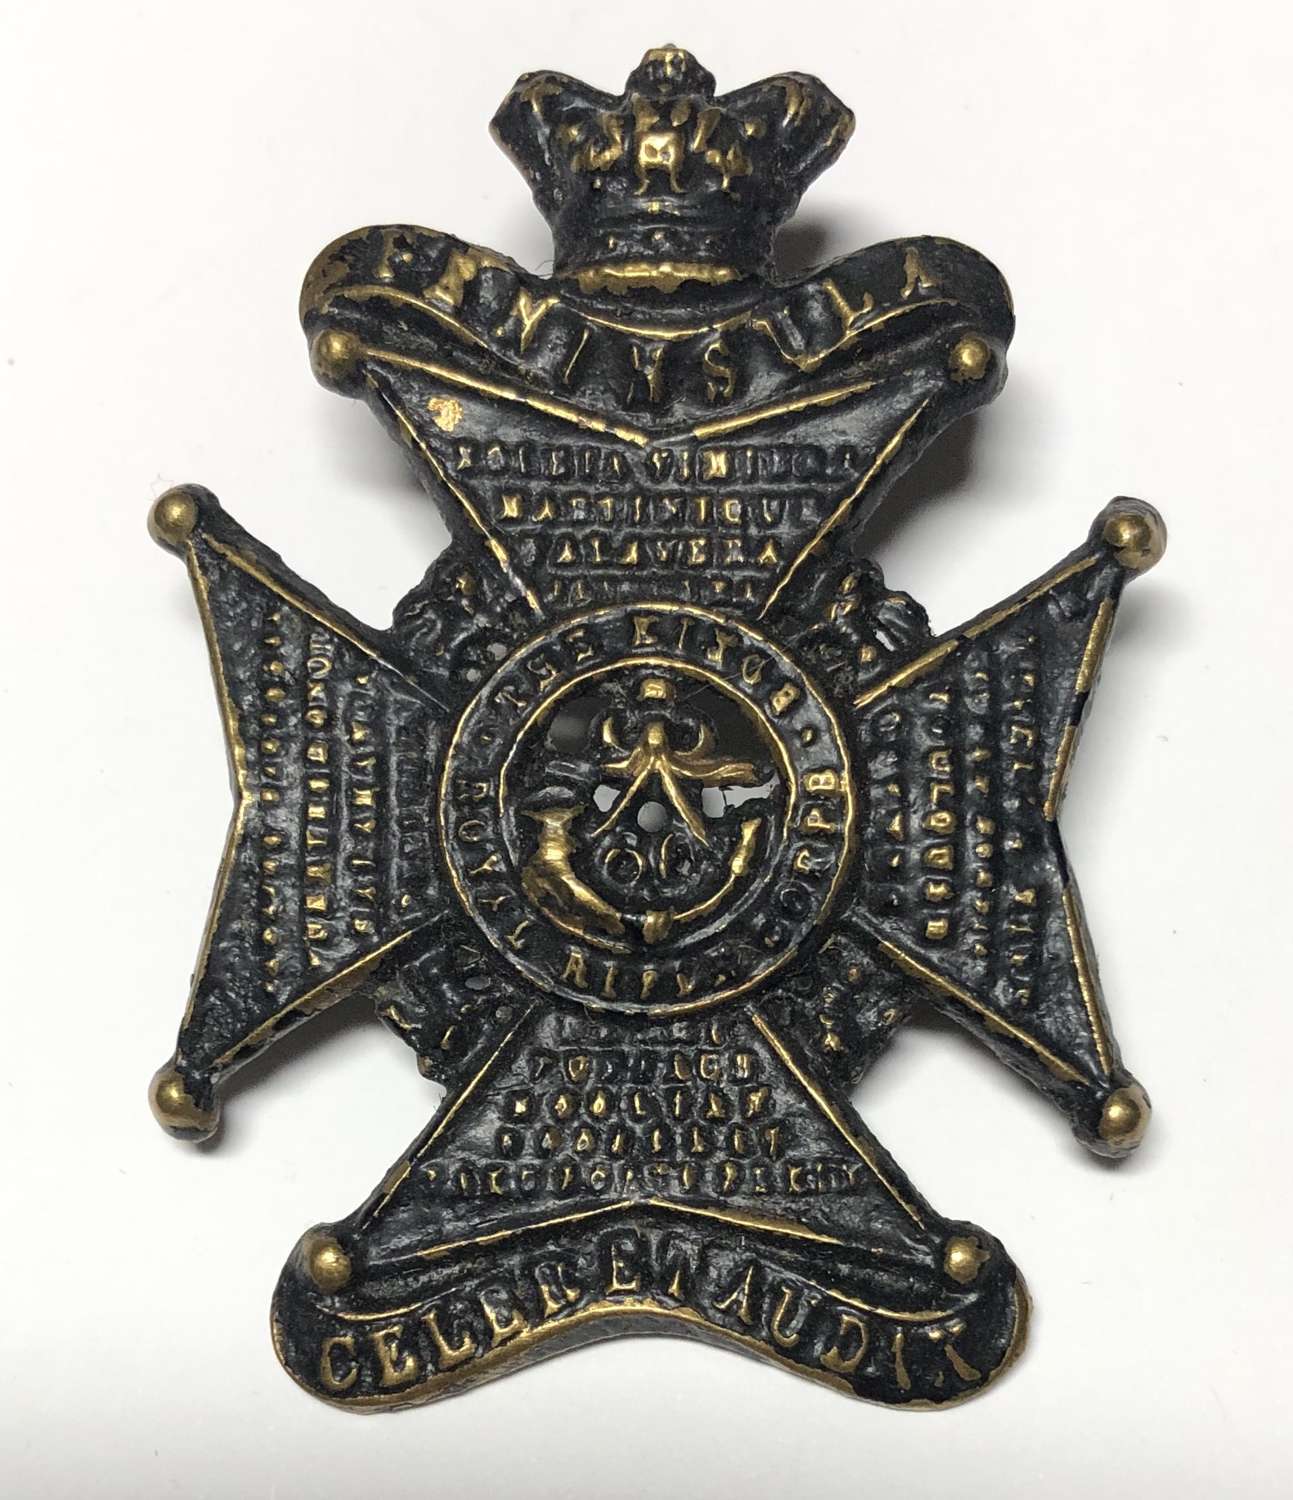 60th Kings Royal Rifle Corps Victorian glengarry badge circa 1874-81